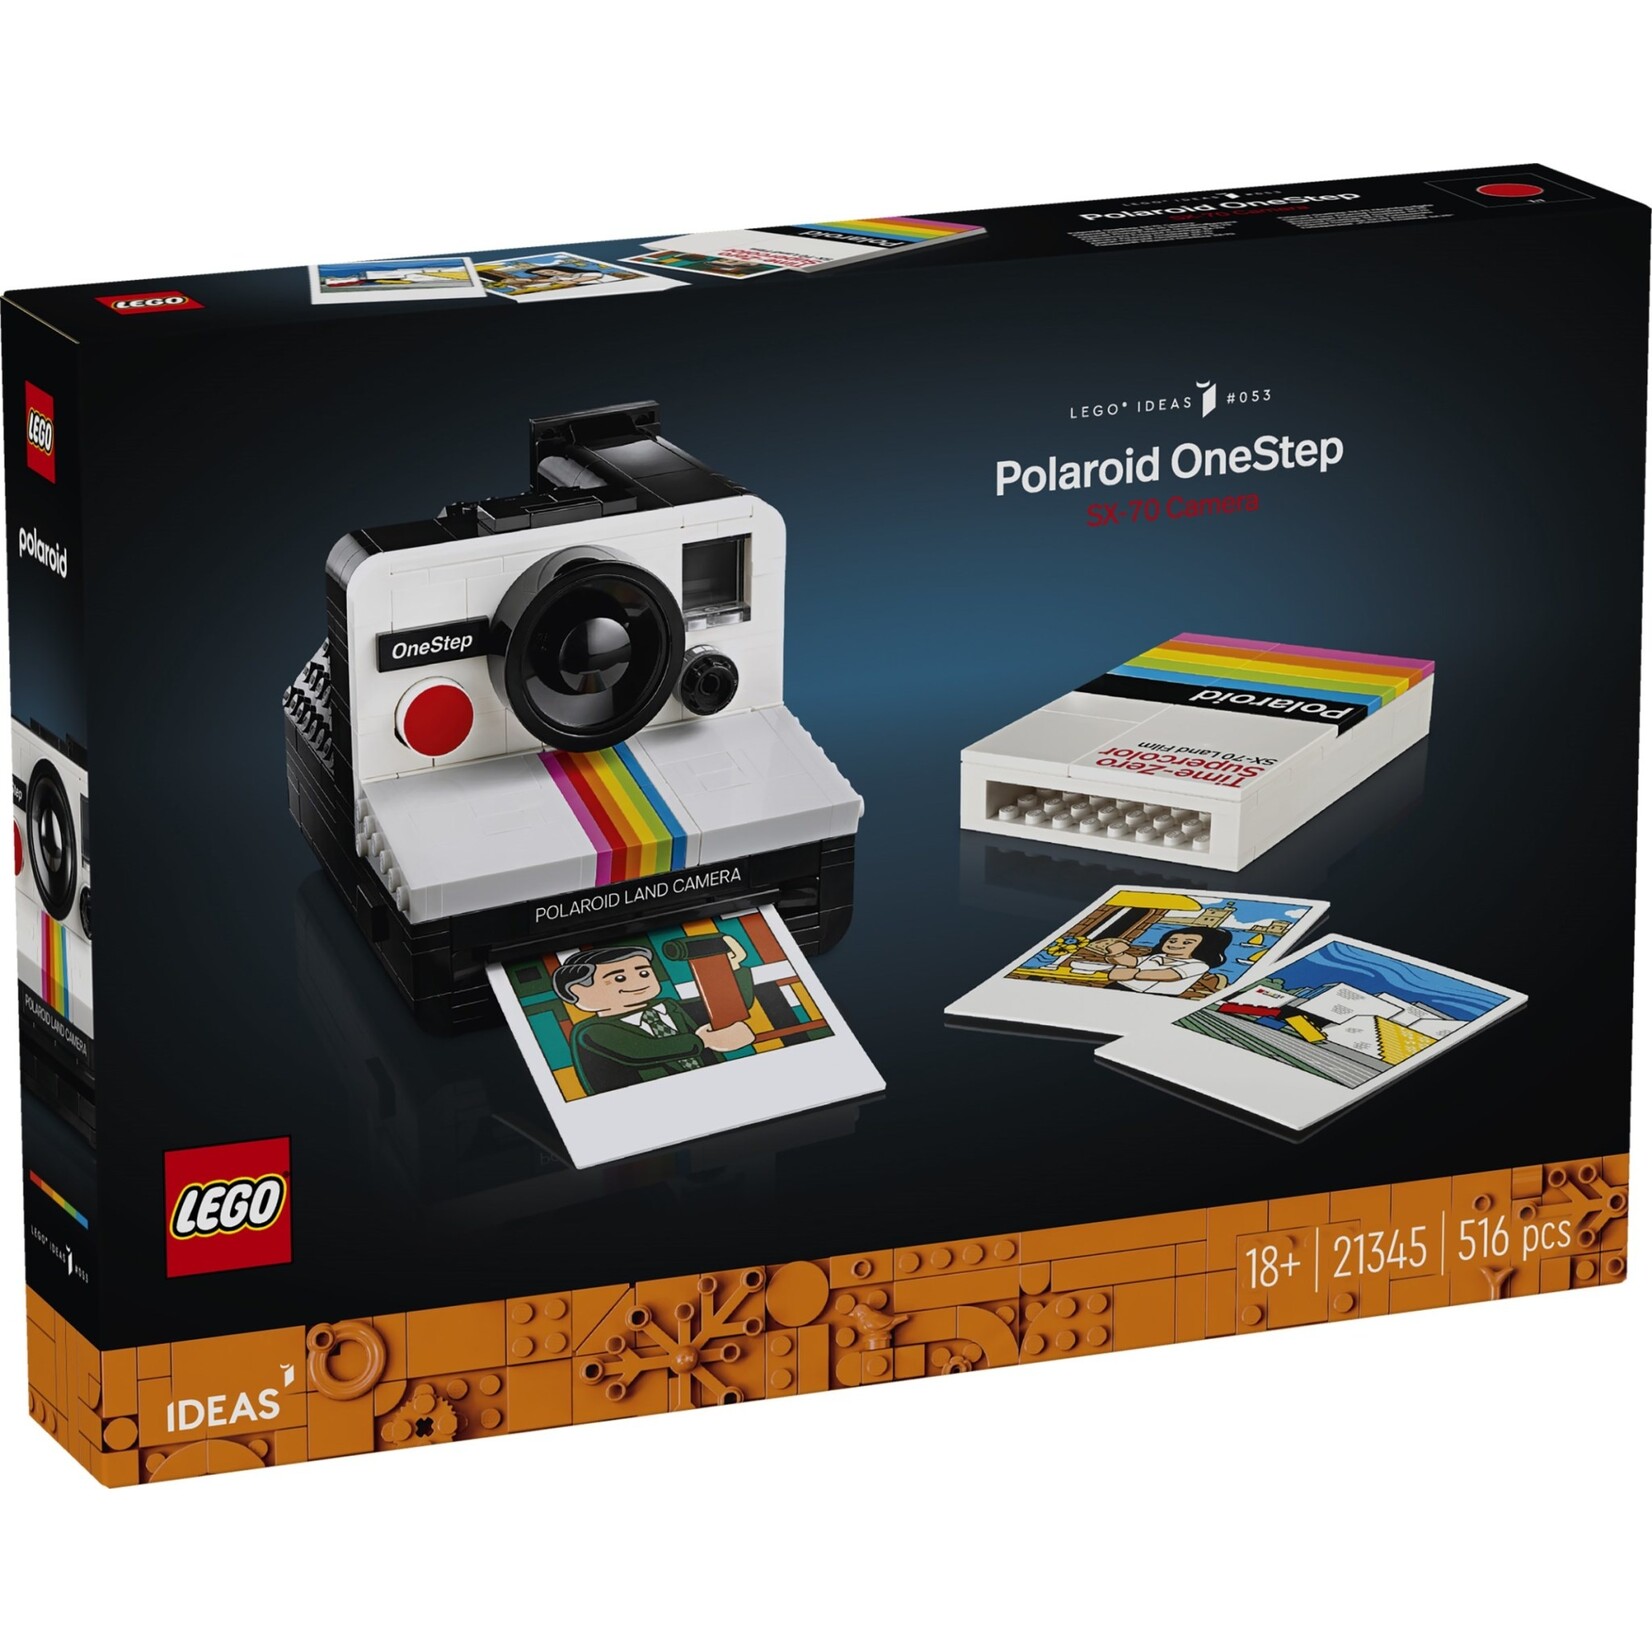 LEGO Polaroid OneStep SX-70 camera - 21345